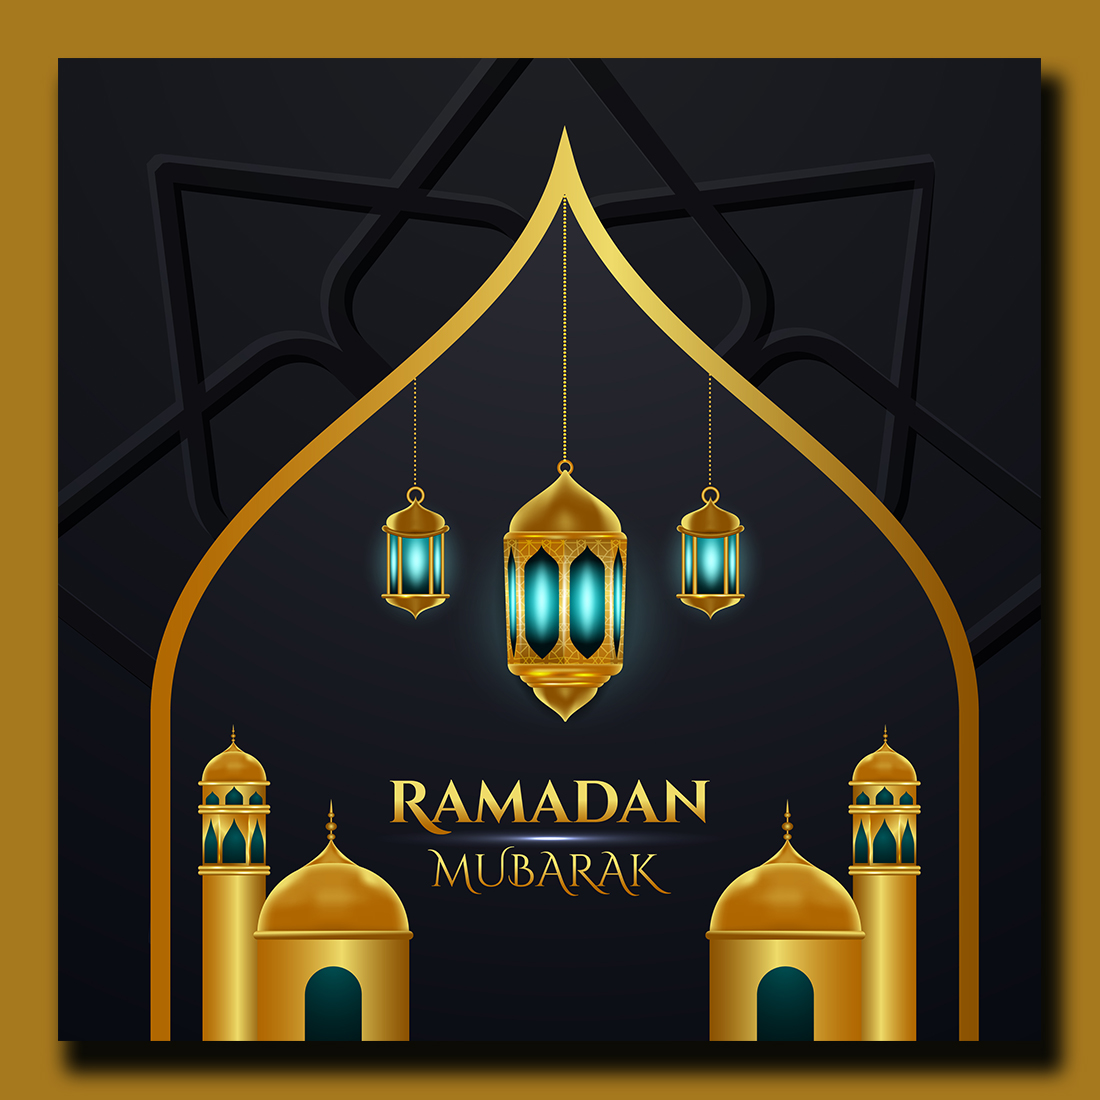 Ramadan Celebration Social Media Post preview image.